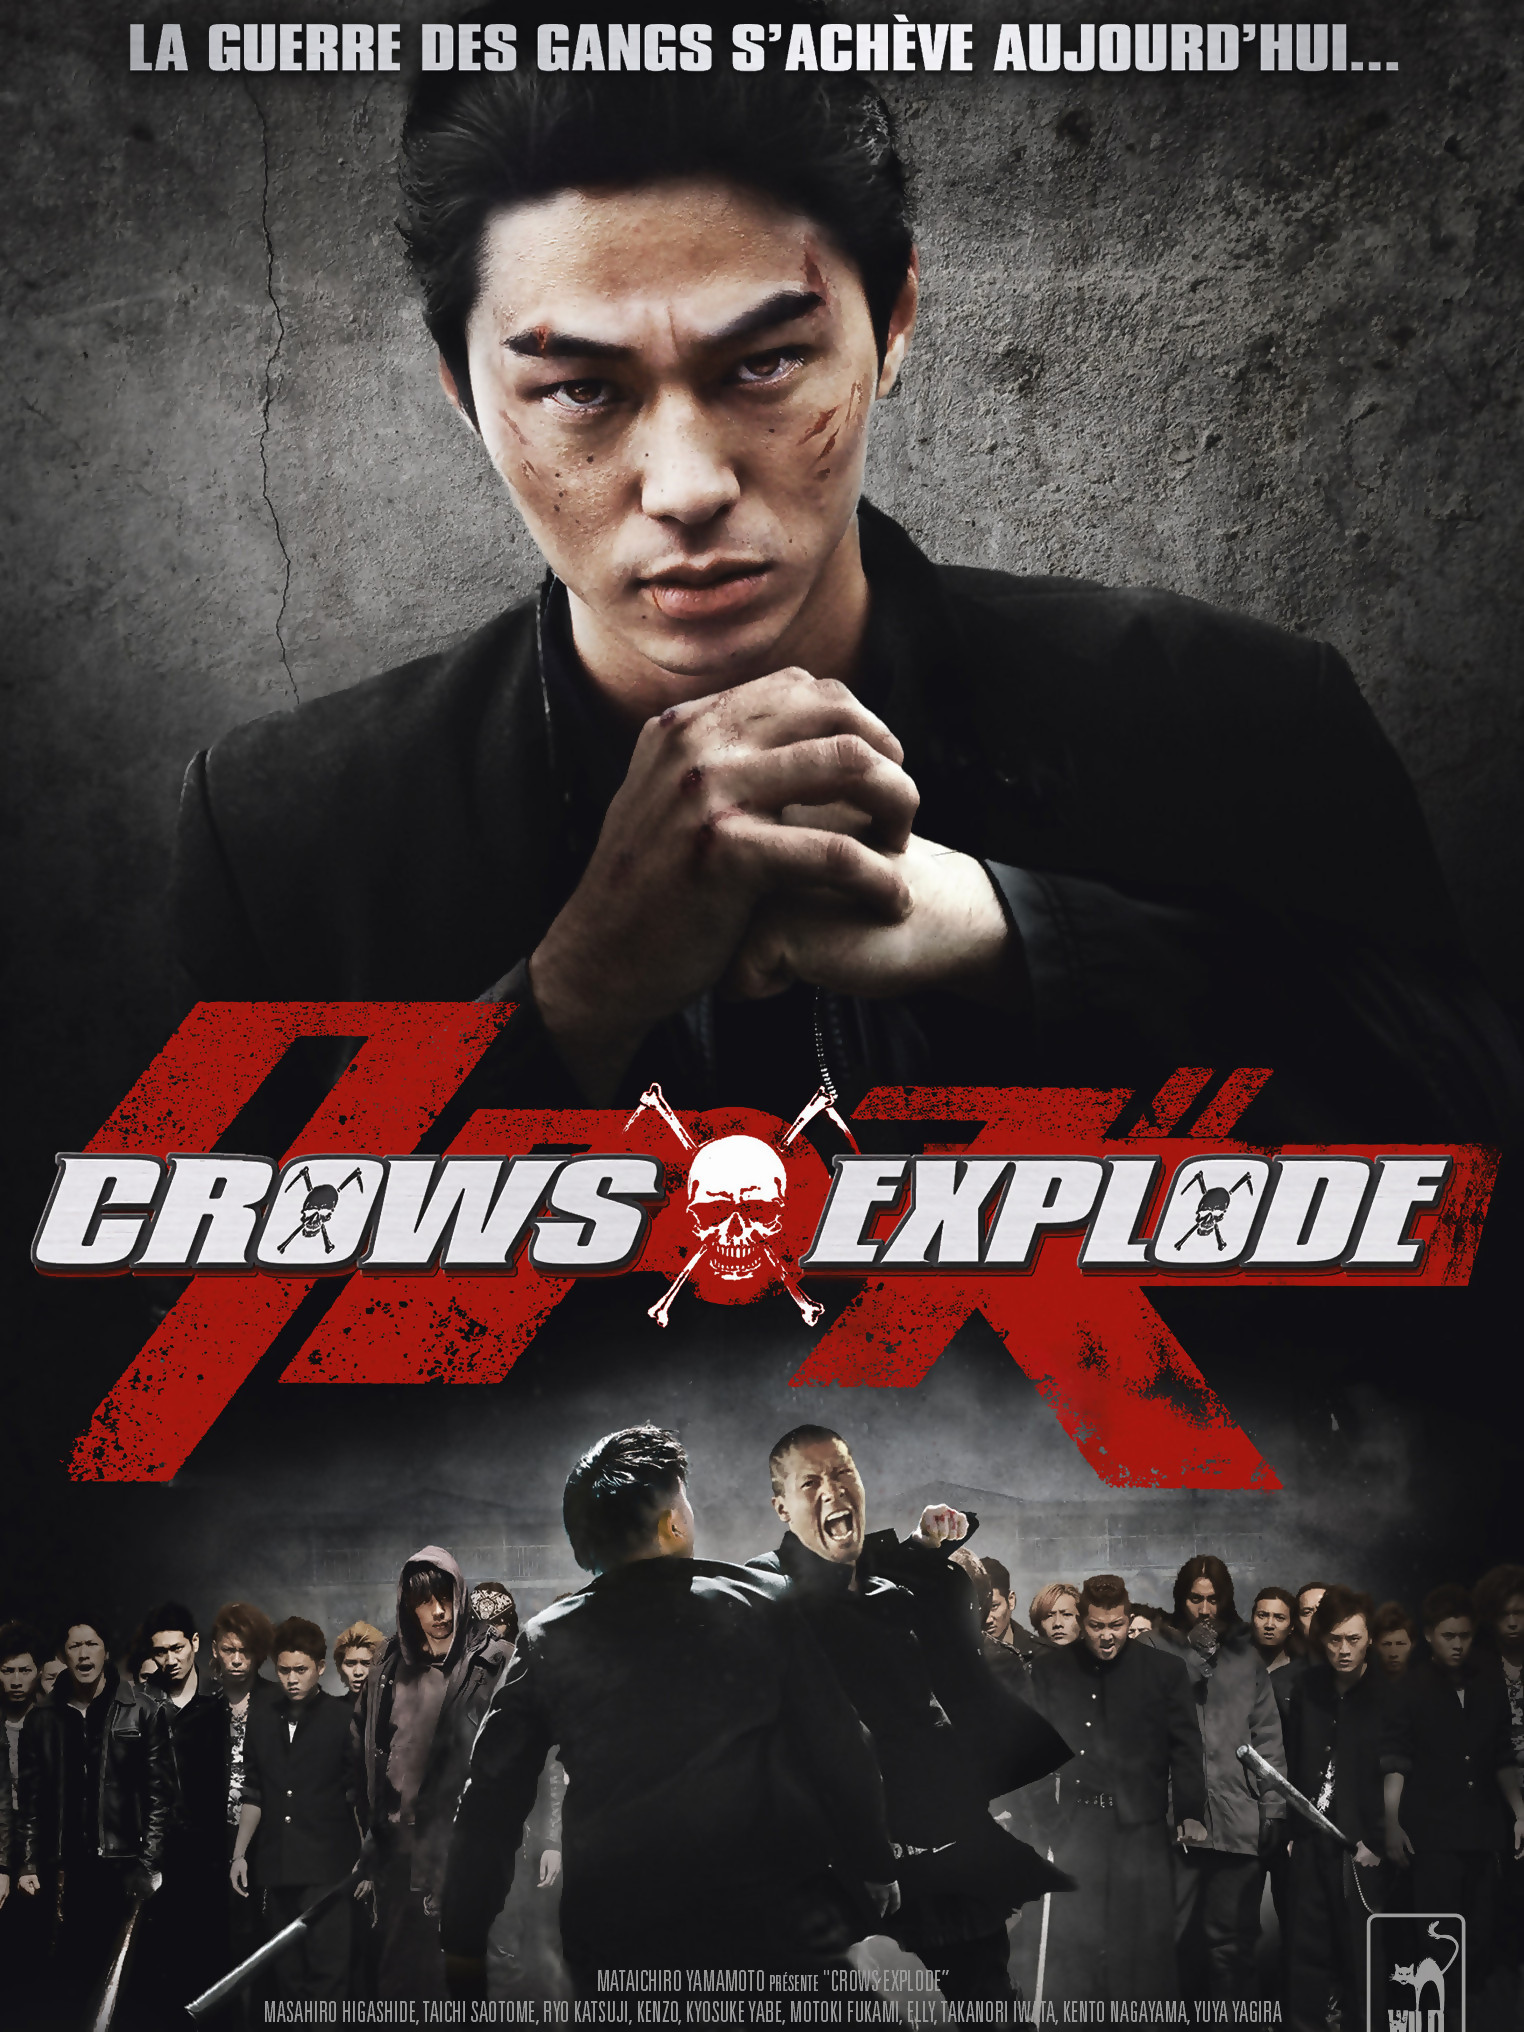 crows zero 3 subtitle indonesia